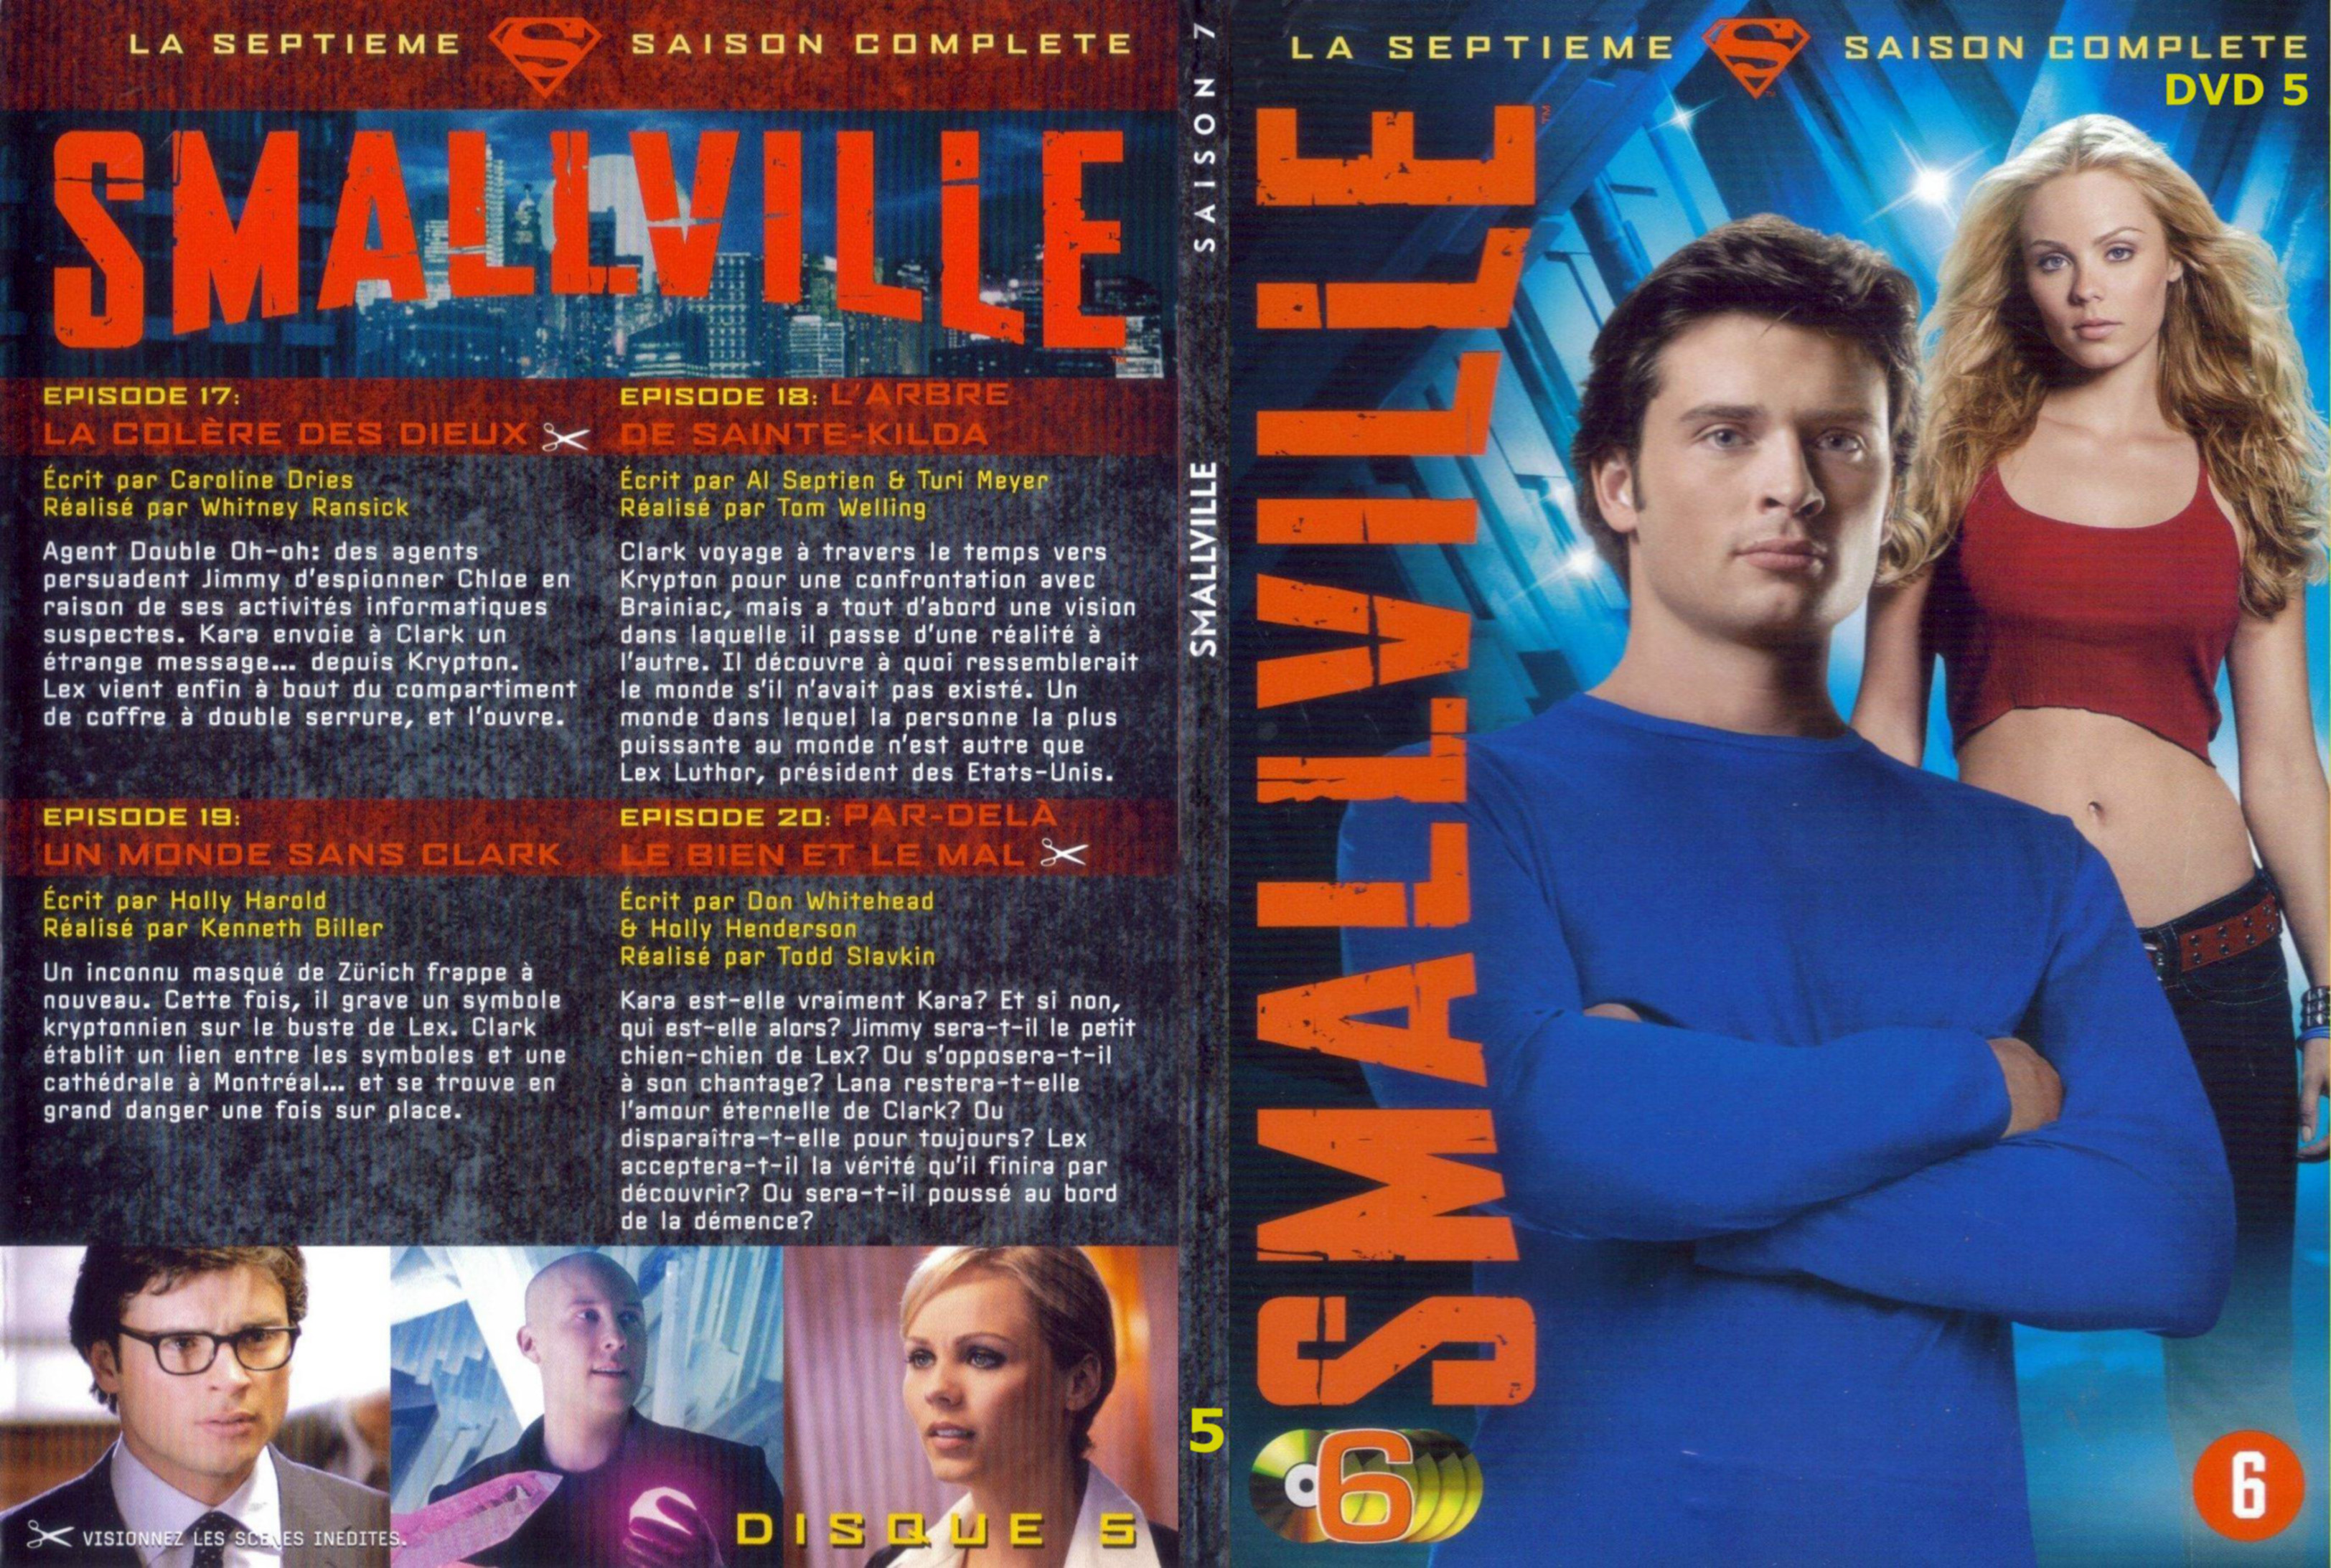 Jaquette DVD Smallville saison 7 DVD 5